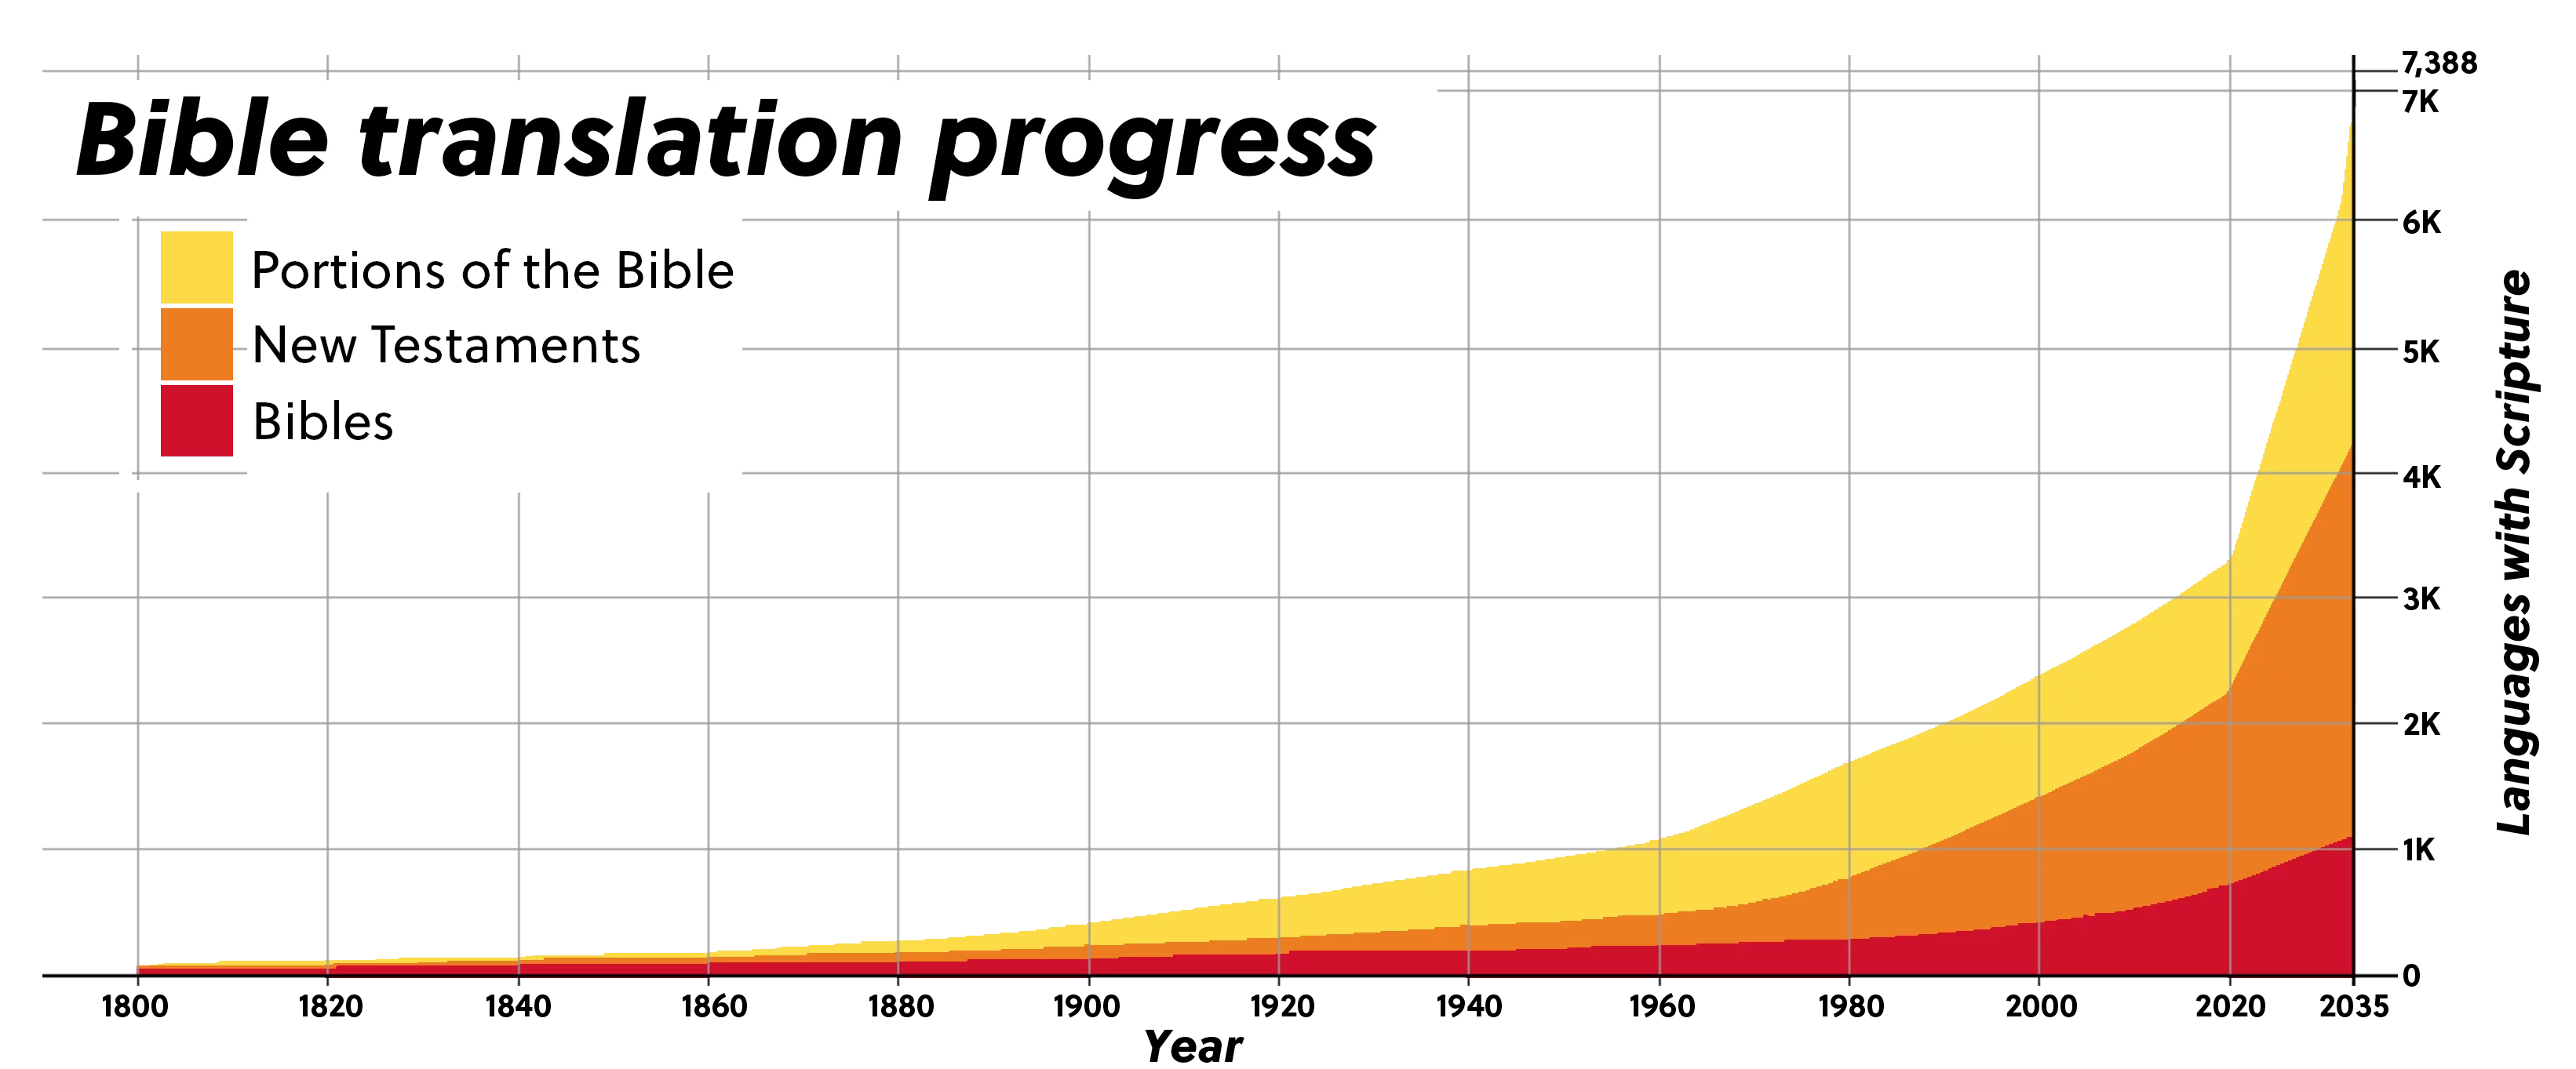 Graph of progress in Bible translation since 1800